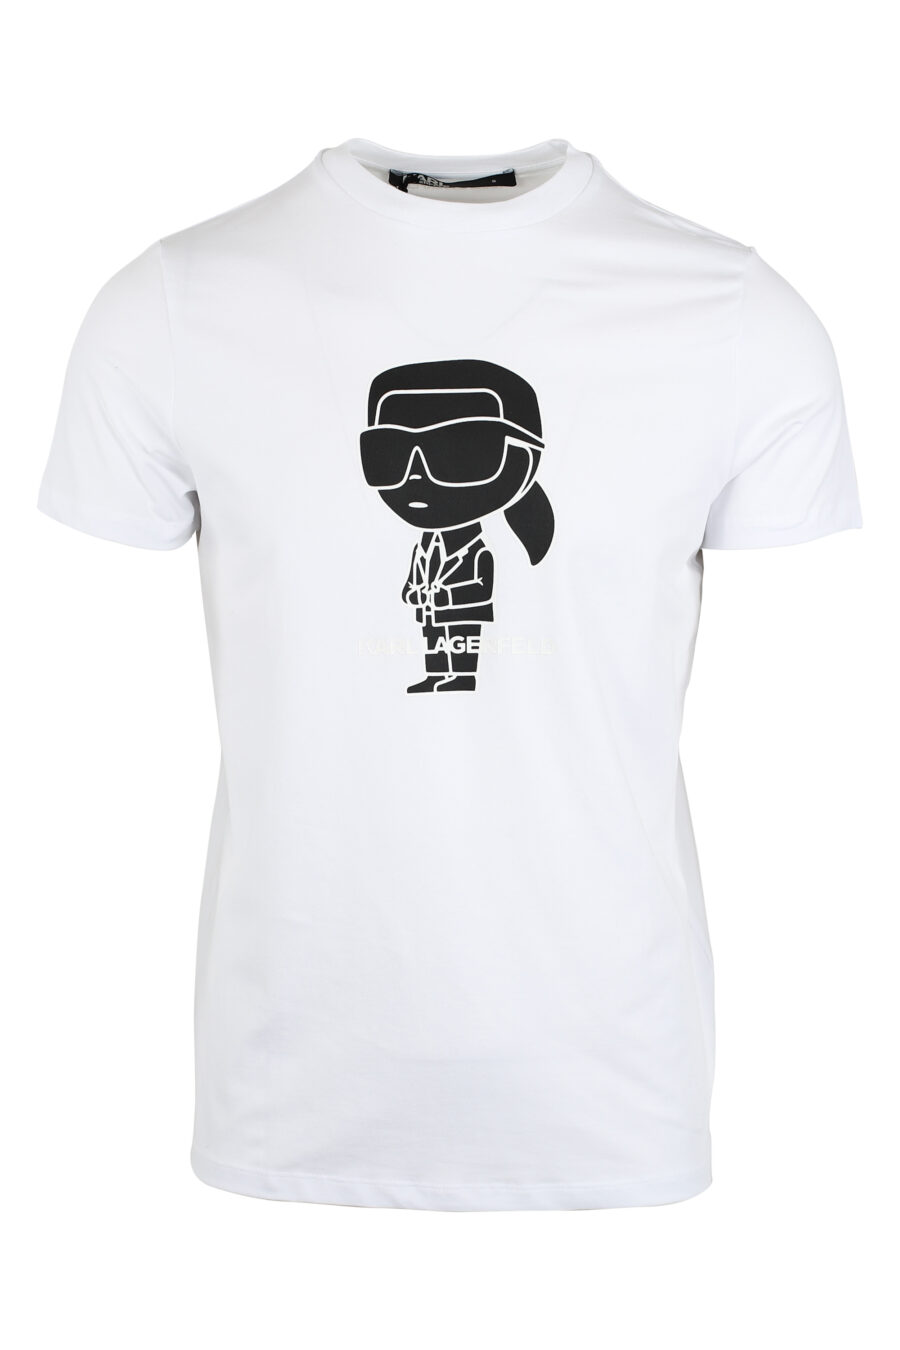 White T-shirt with contrasting black "karl" maxilogo - IMG 9490